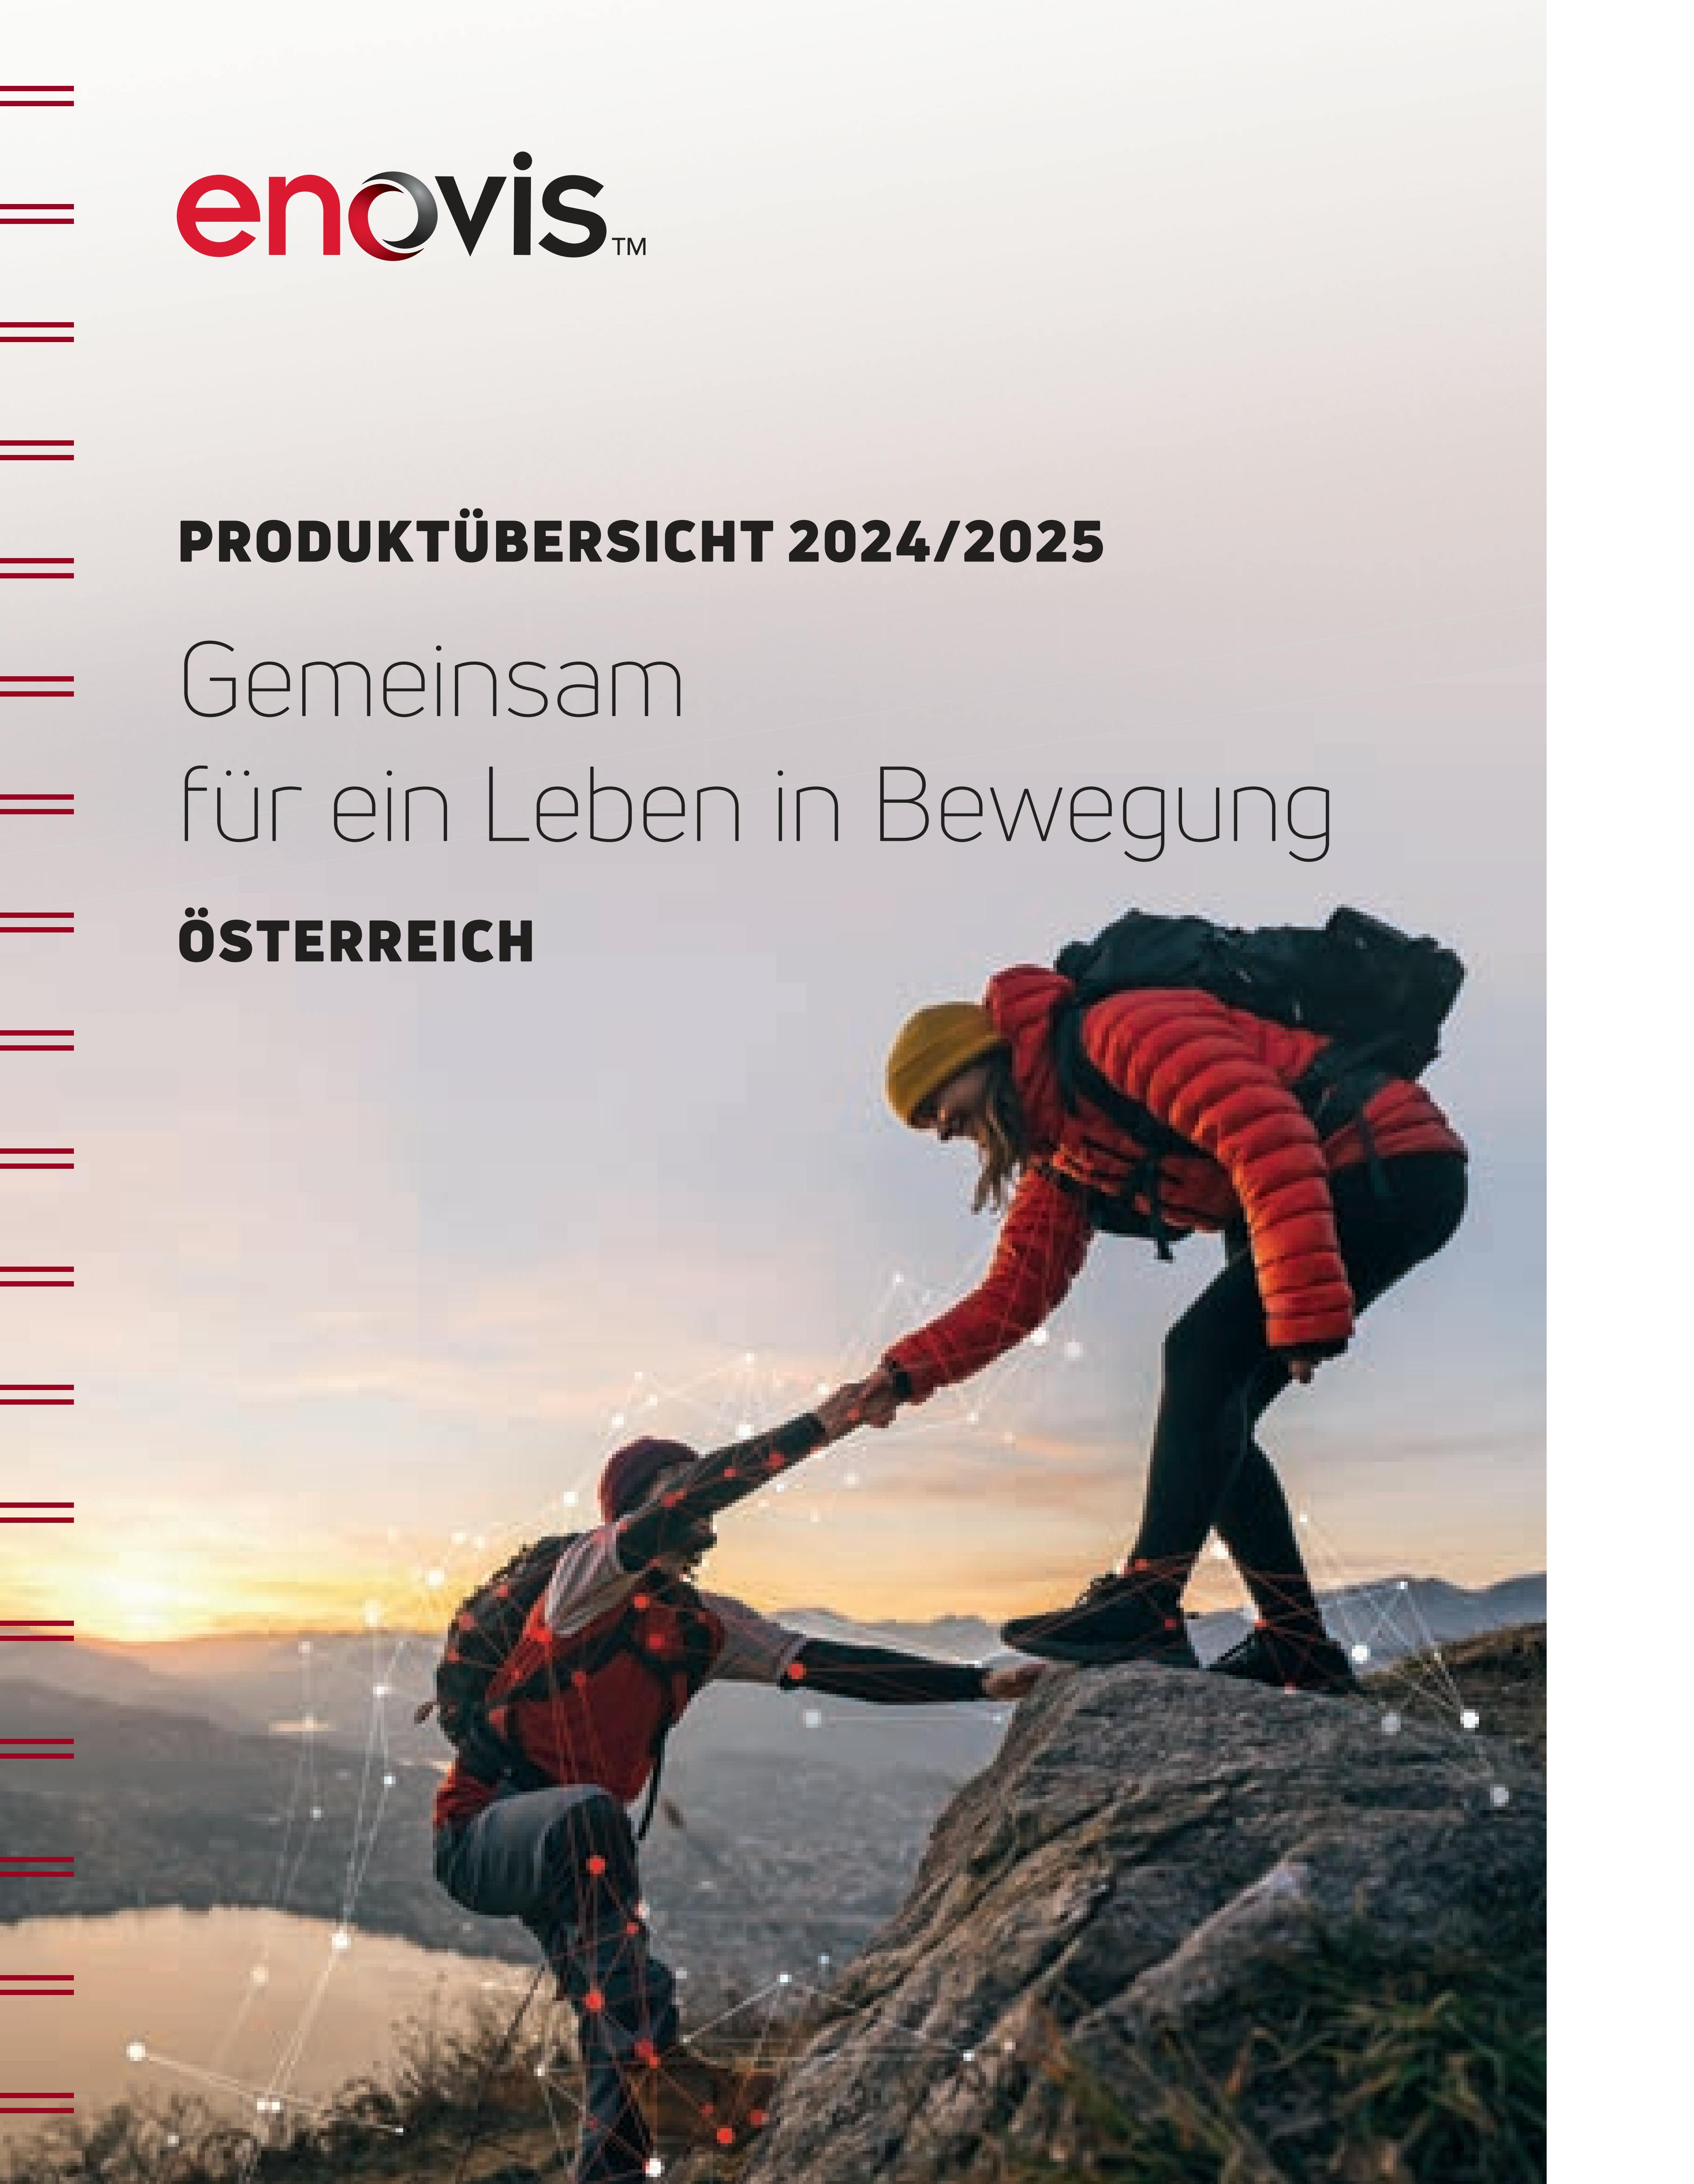 Booklet_Austria_Produktuebersicht_2022_MKT-BOOK-DJO-AT-Rev.D-2023-05-04.pdf